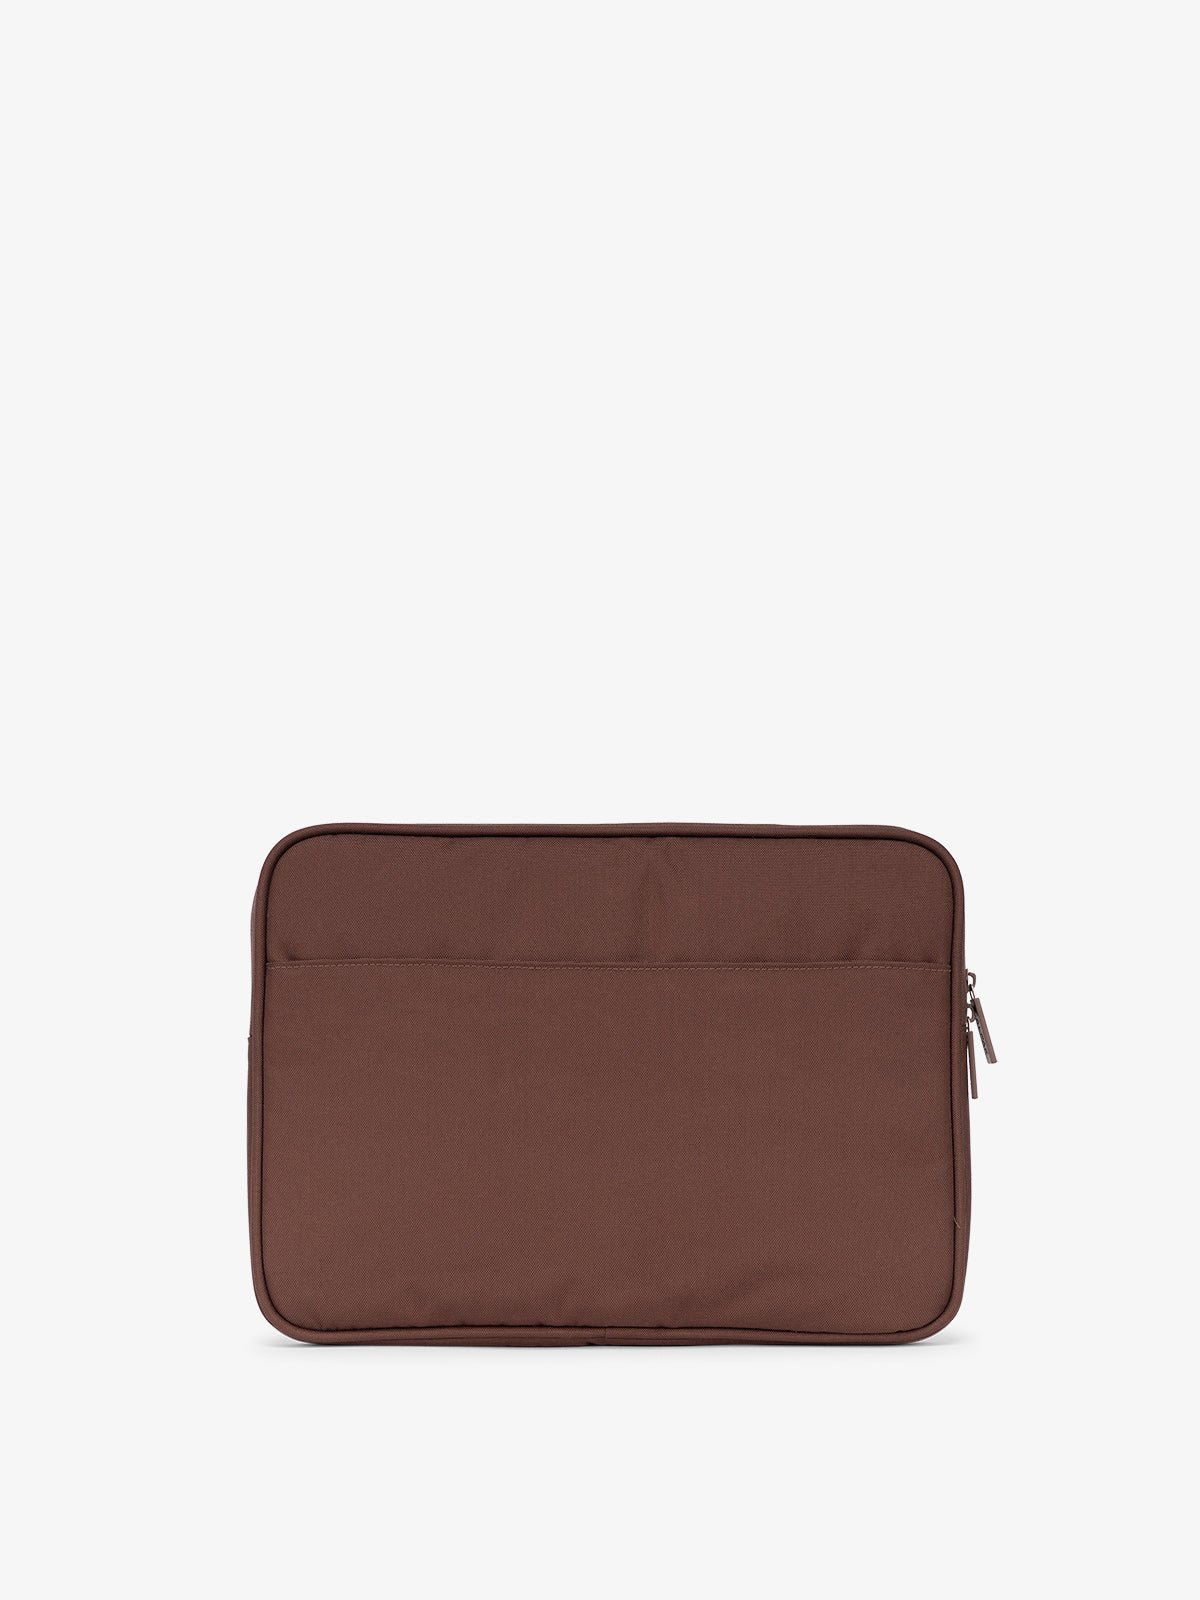 CALPAK 13-14 Inch water resistant laptop case with back slip pocket in dark brown